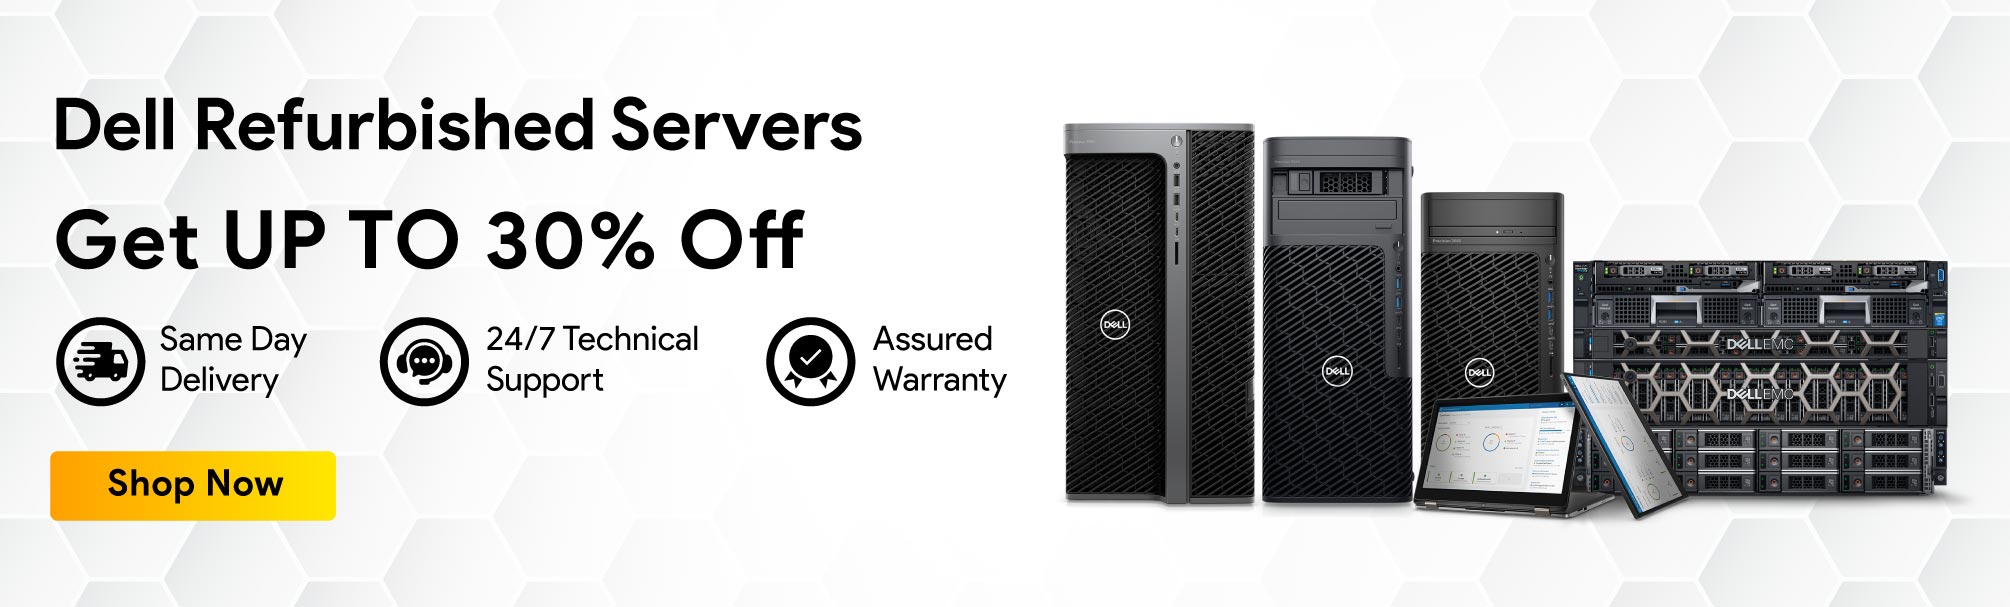 Dell Refurb Servers